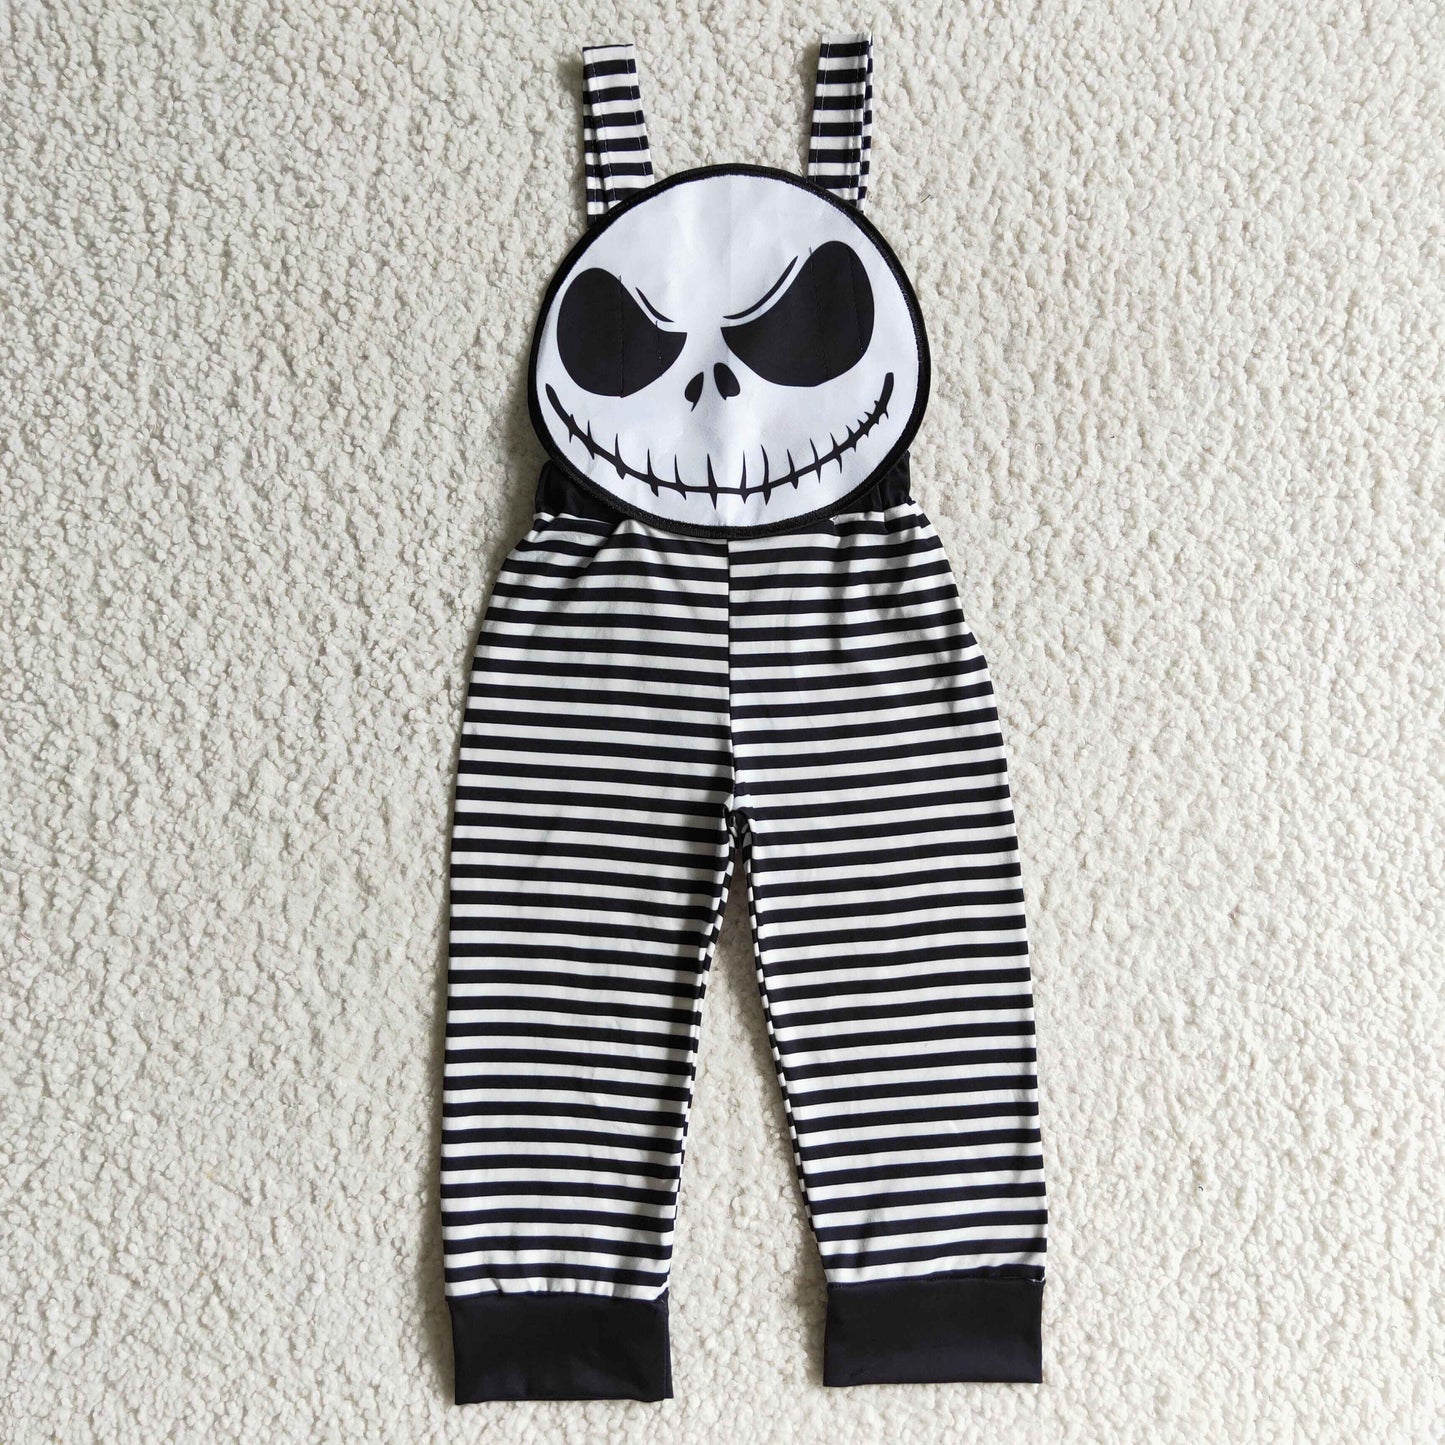 SR0082 Baby Boy Halloween Black Striped Romper